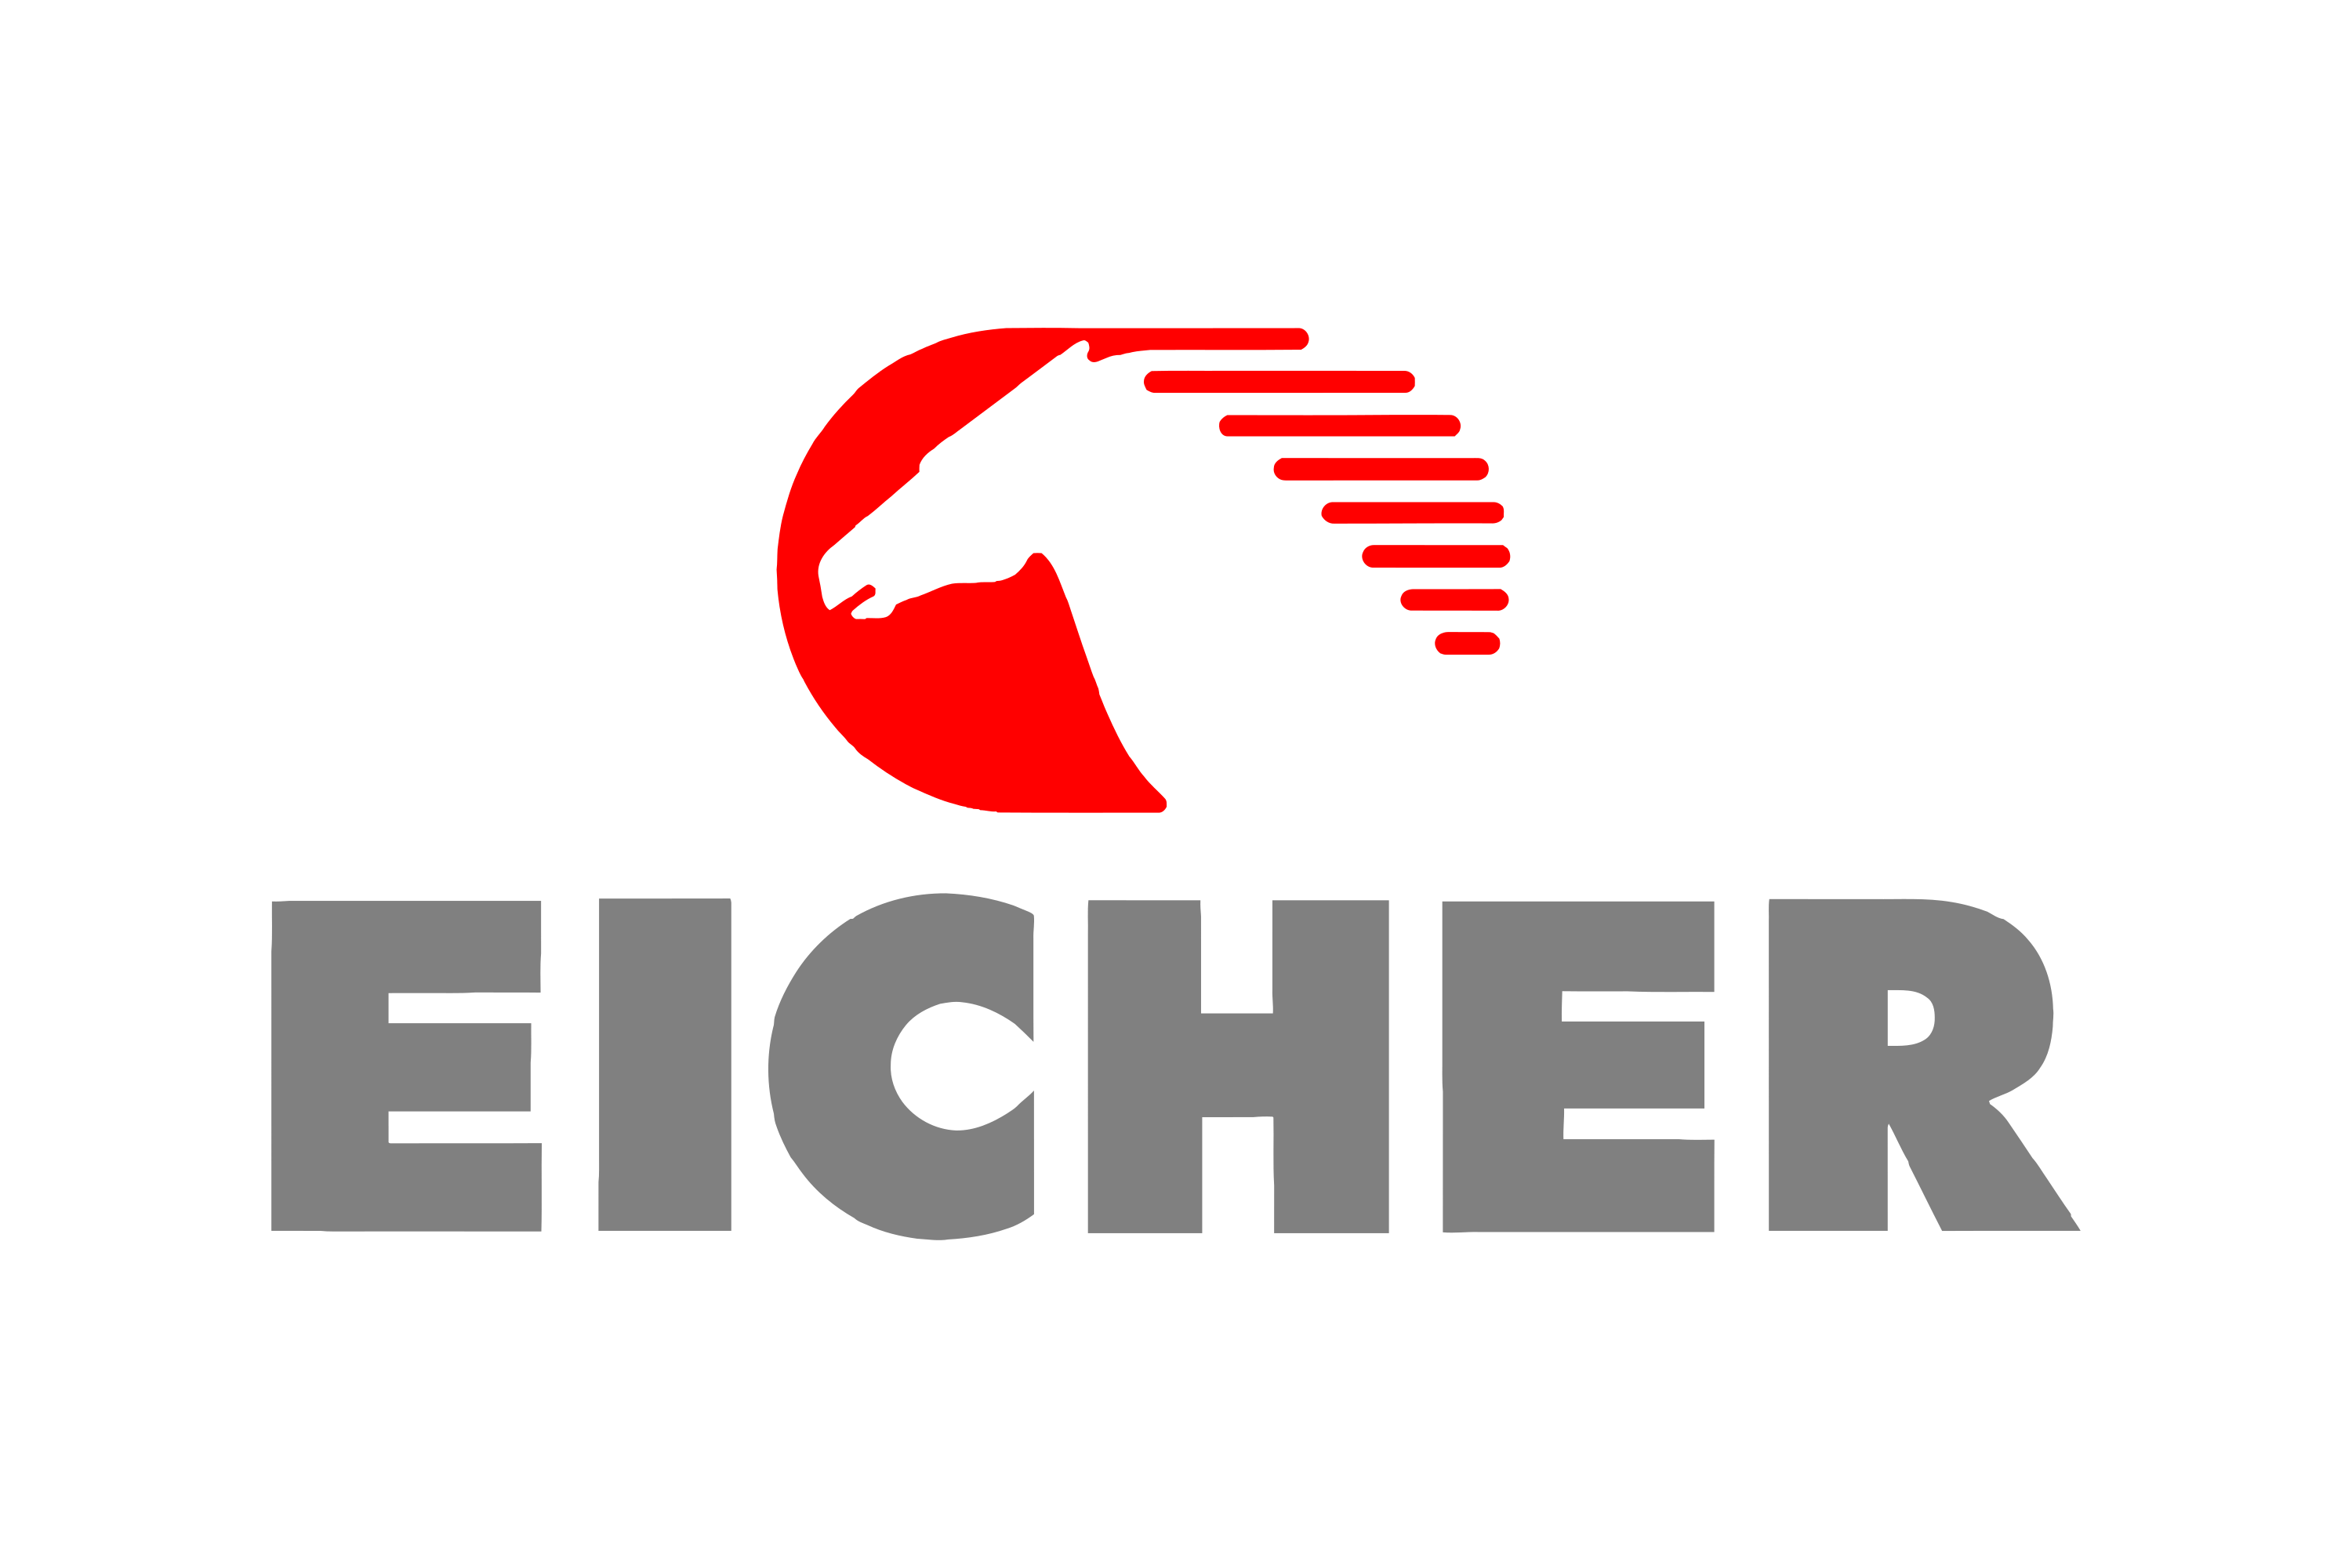 Buy Eicher Motors; target of Rs 4150: Motilal Oswal